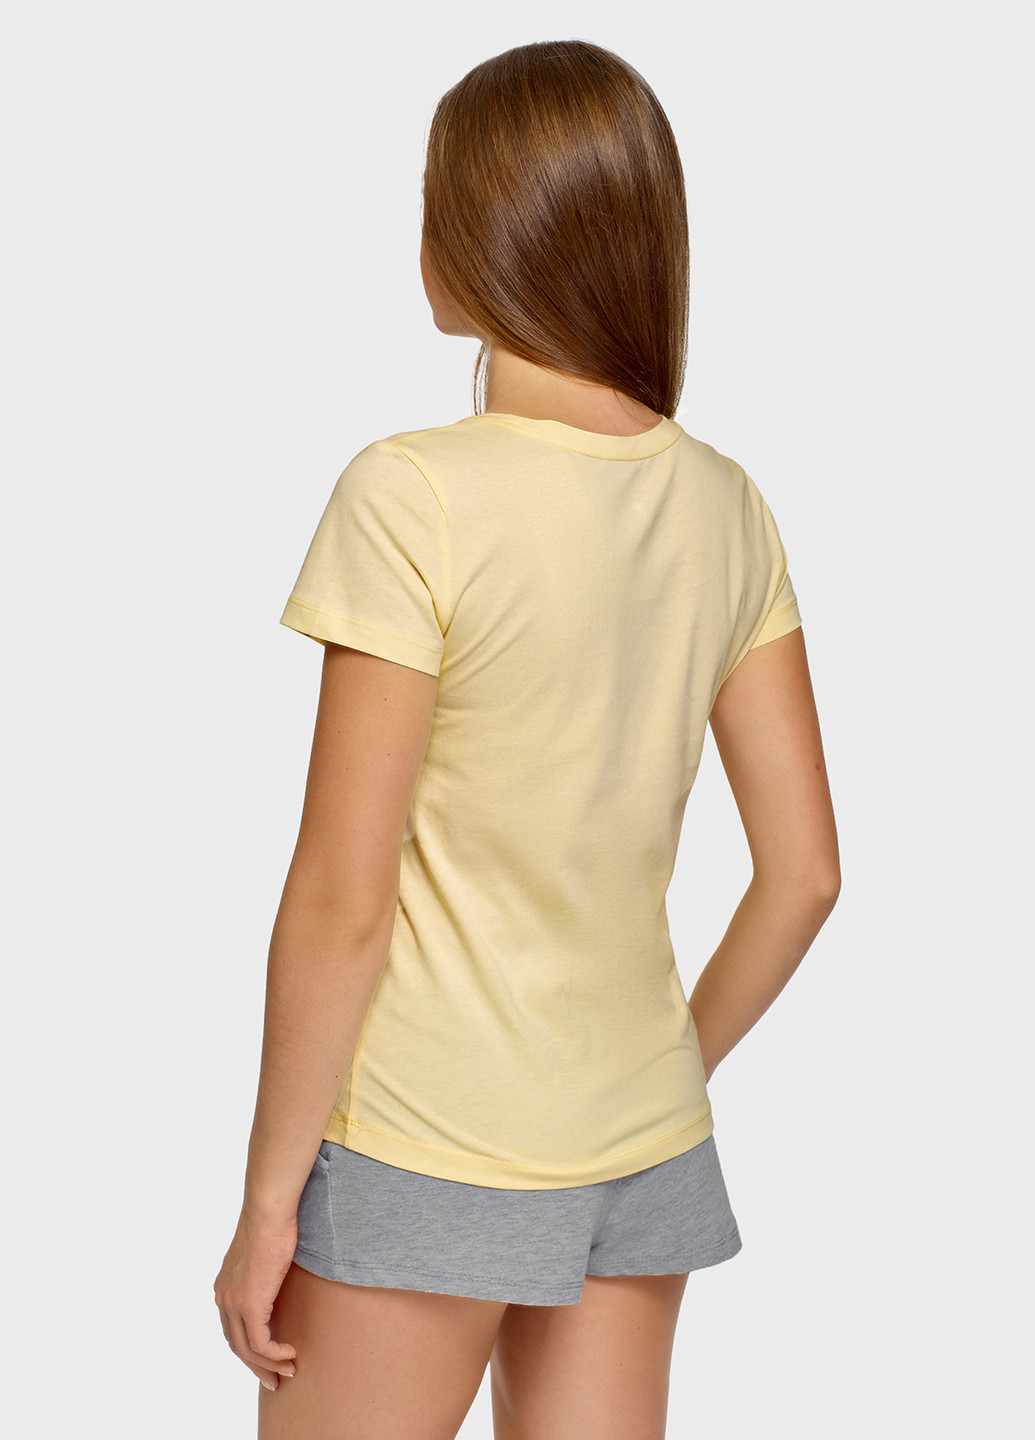 Желтая всесезон пижама (футболка, шорты) футболка + шорты Oodji